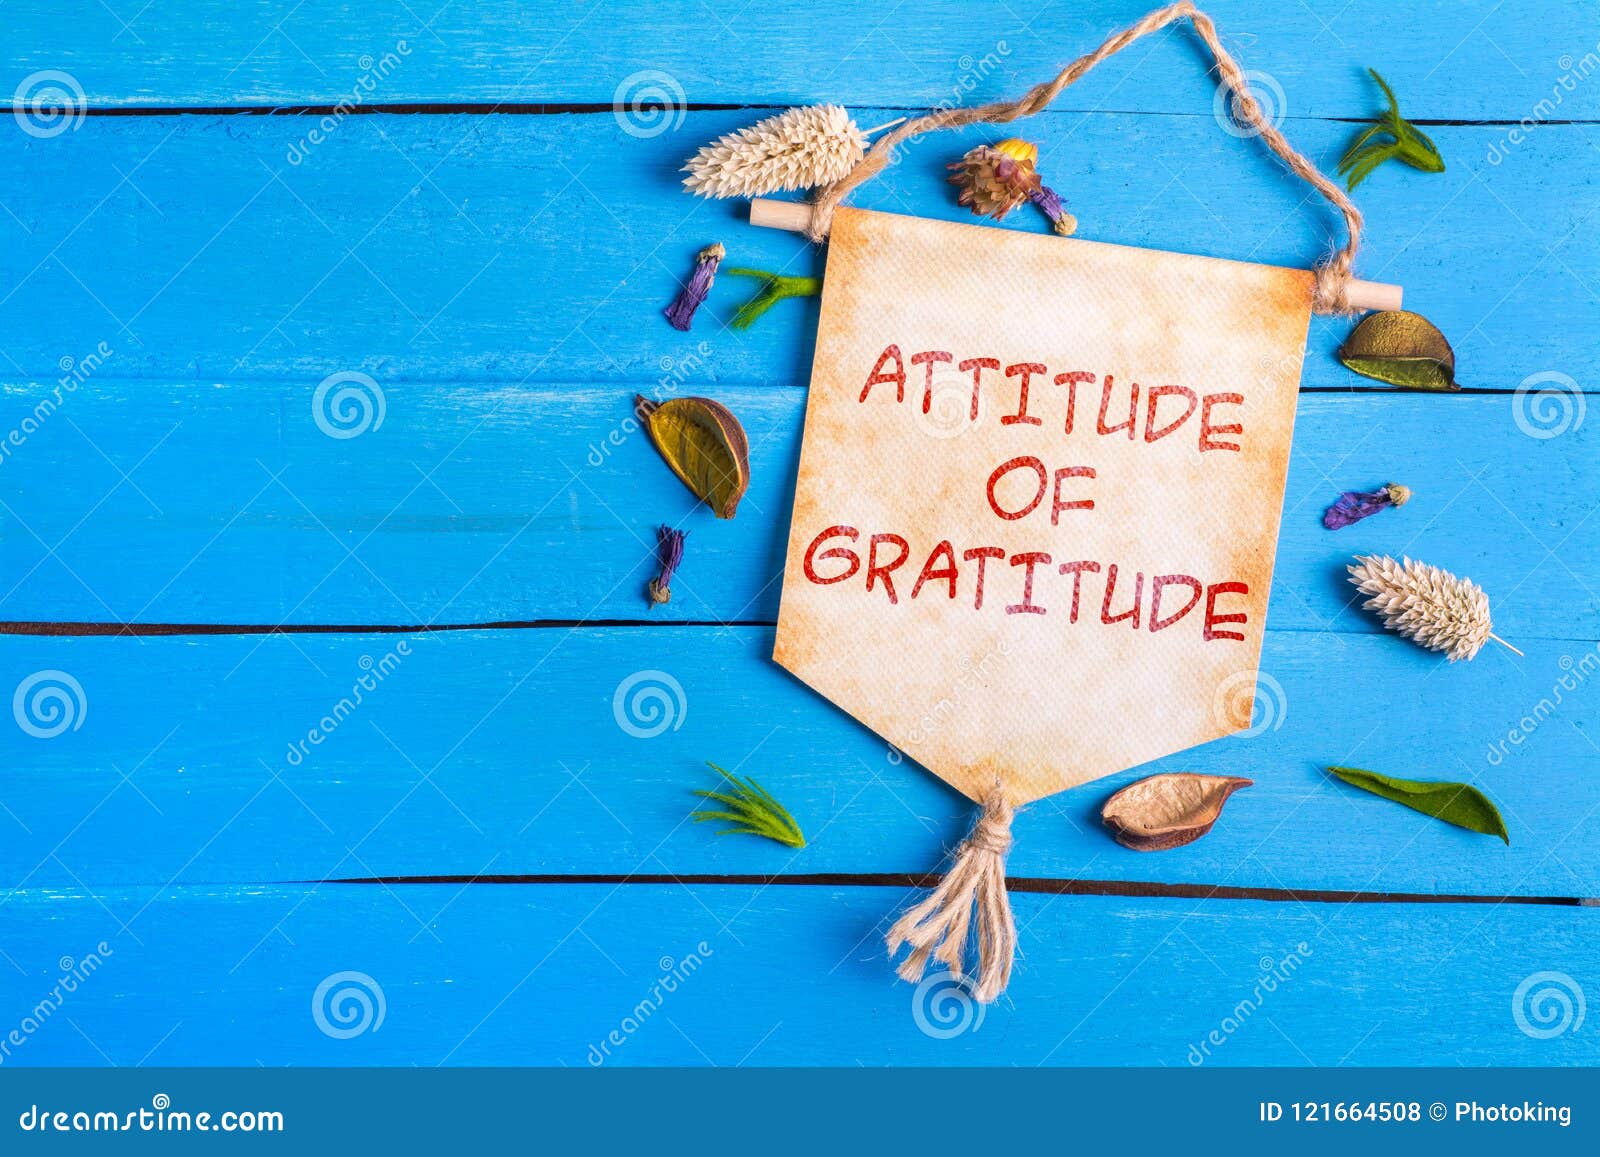 attitude of gratitude text on paper scroll